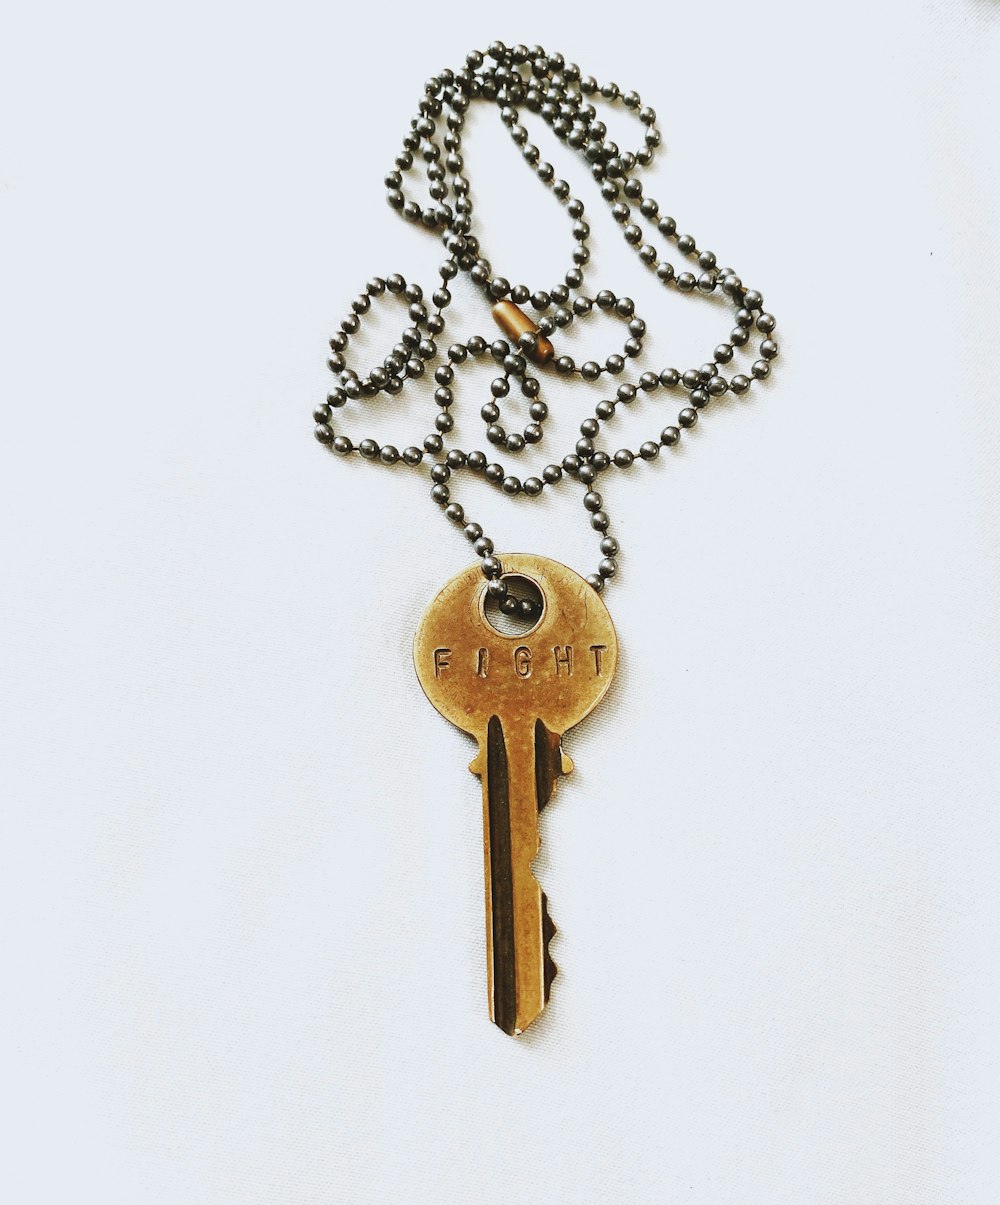 gray key fight pendant necklace on white background